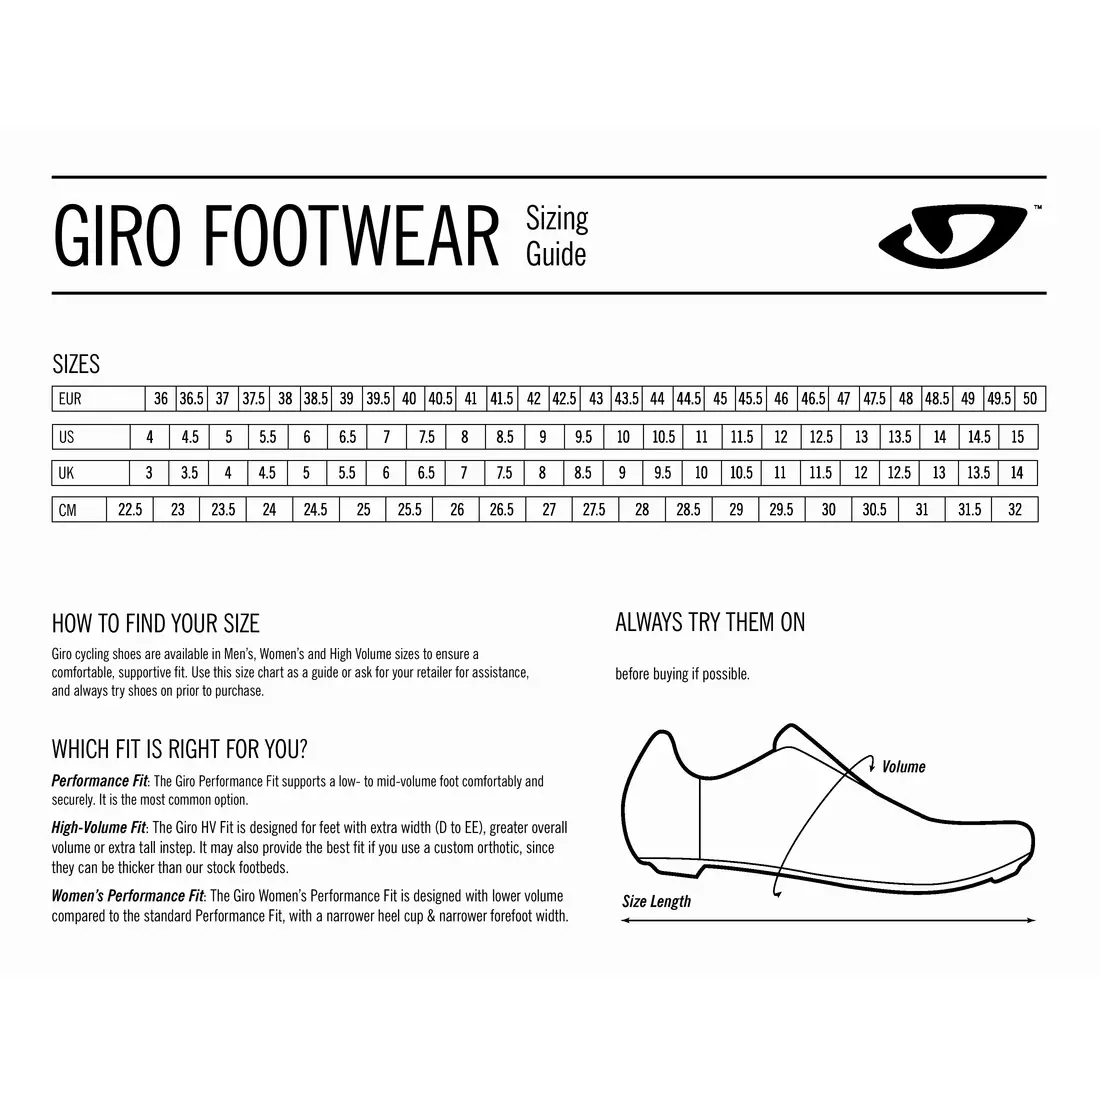 GIRO pantofi de ciclism pentru bărbați EMPIRE VR70 Knit lime black GR-7089786